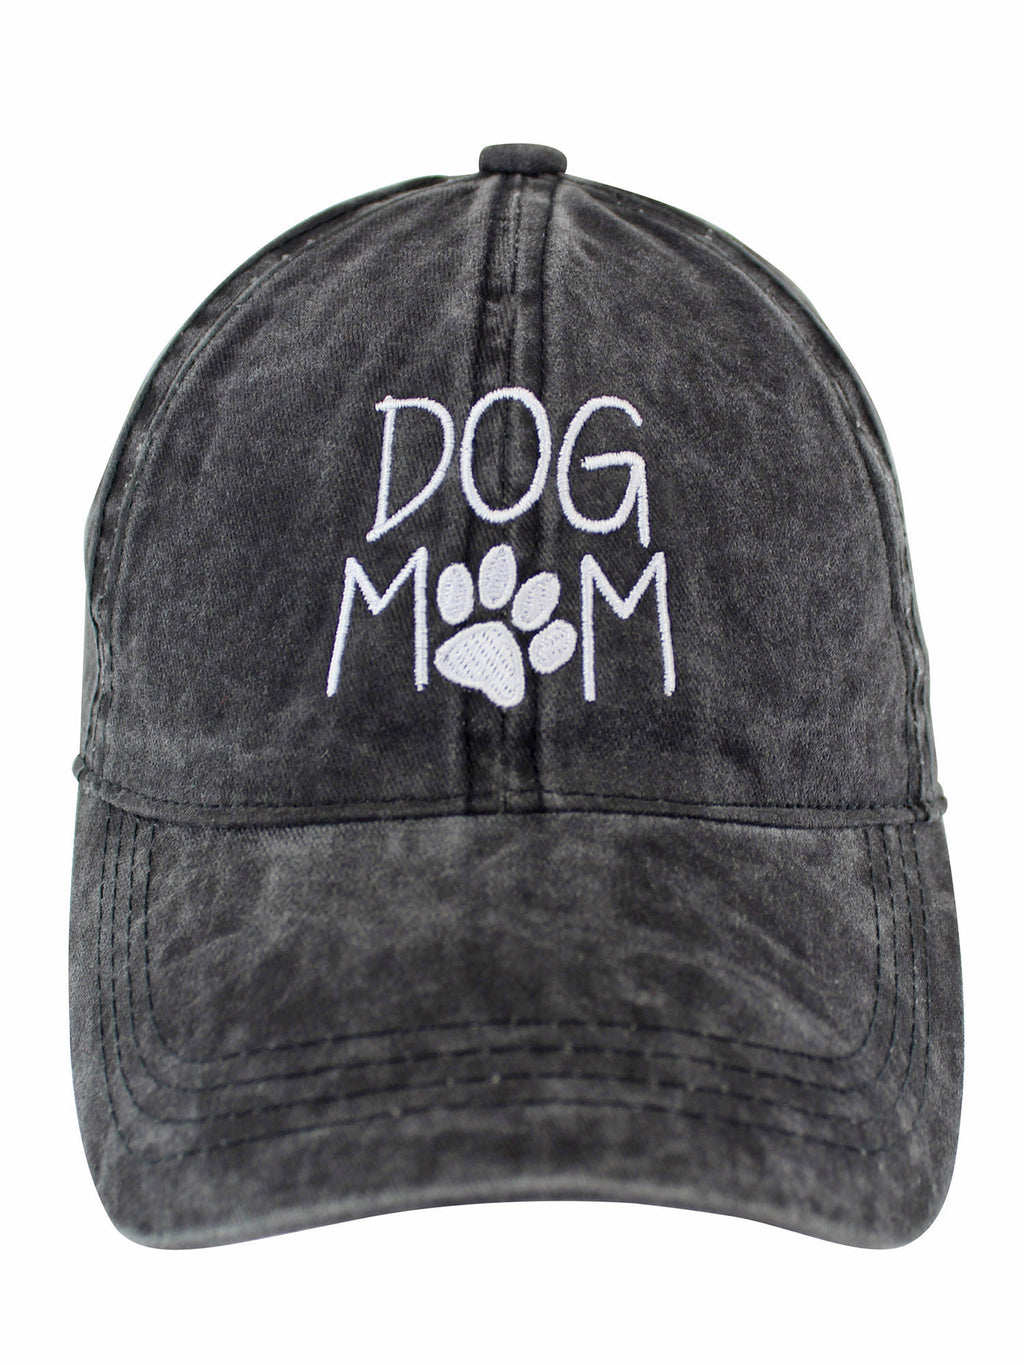 Dog Mom Black Cotton Baseball Cap